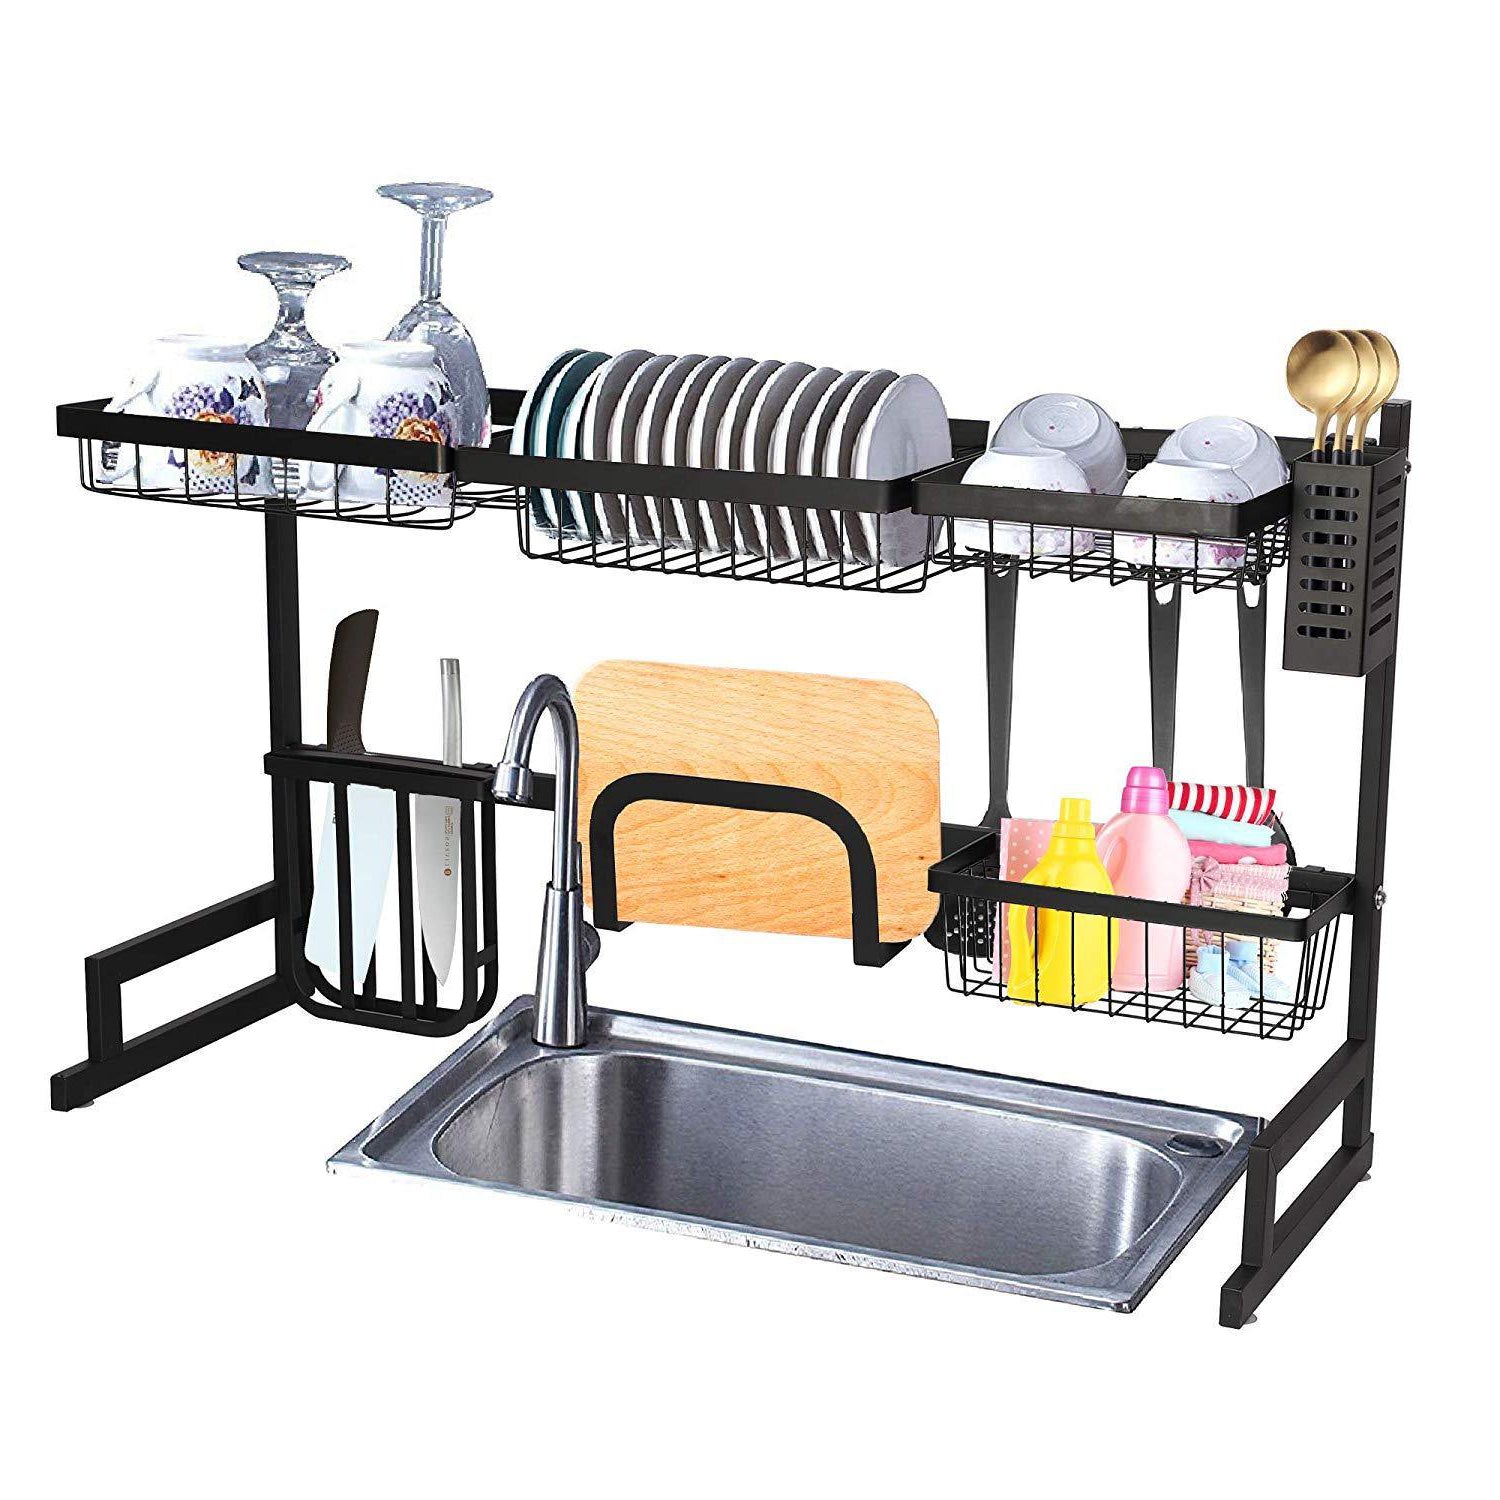 Over The Sink Dish Drying Rack Stainless Steel Kitchen Supplies Storage Shelf Drainer Organizer, 35" x 12.2" x 20.4"